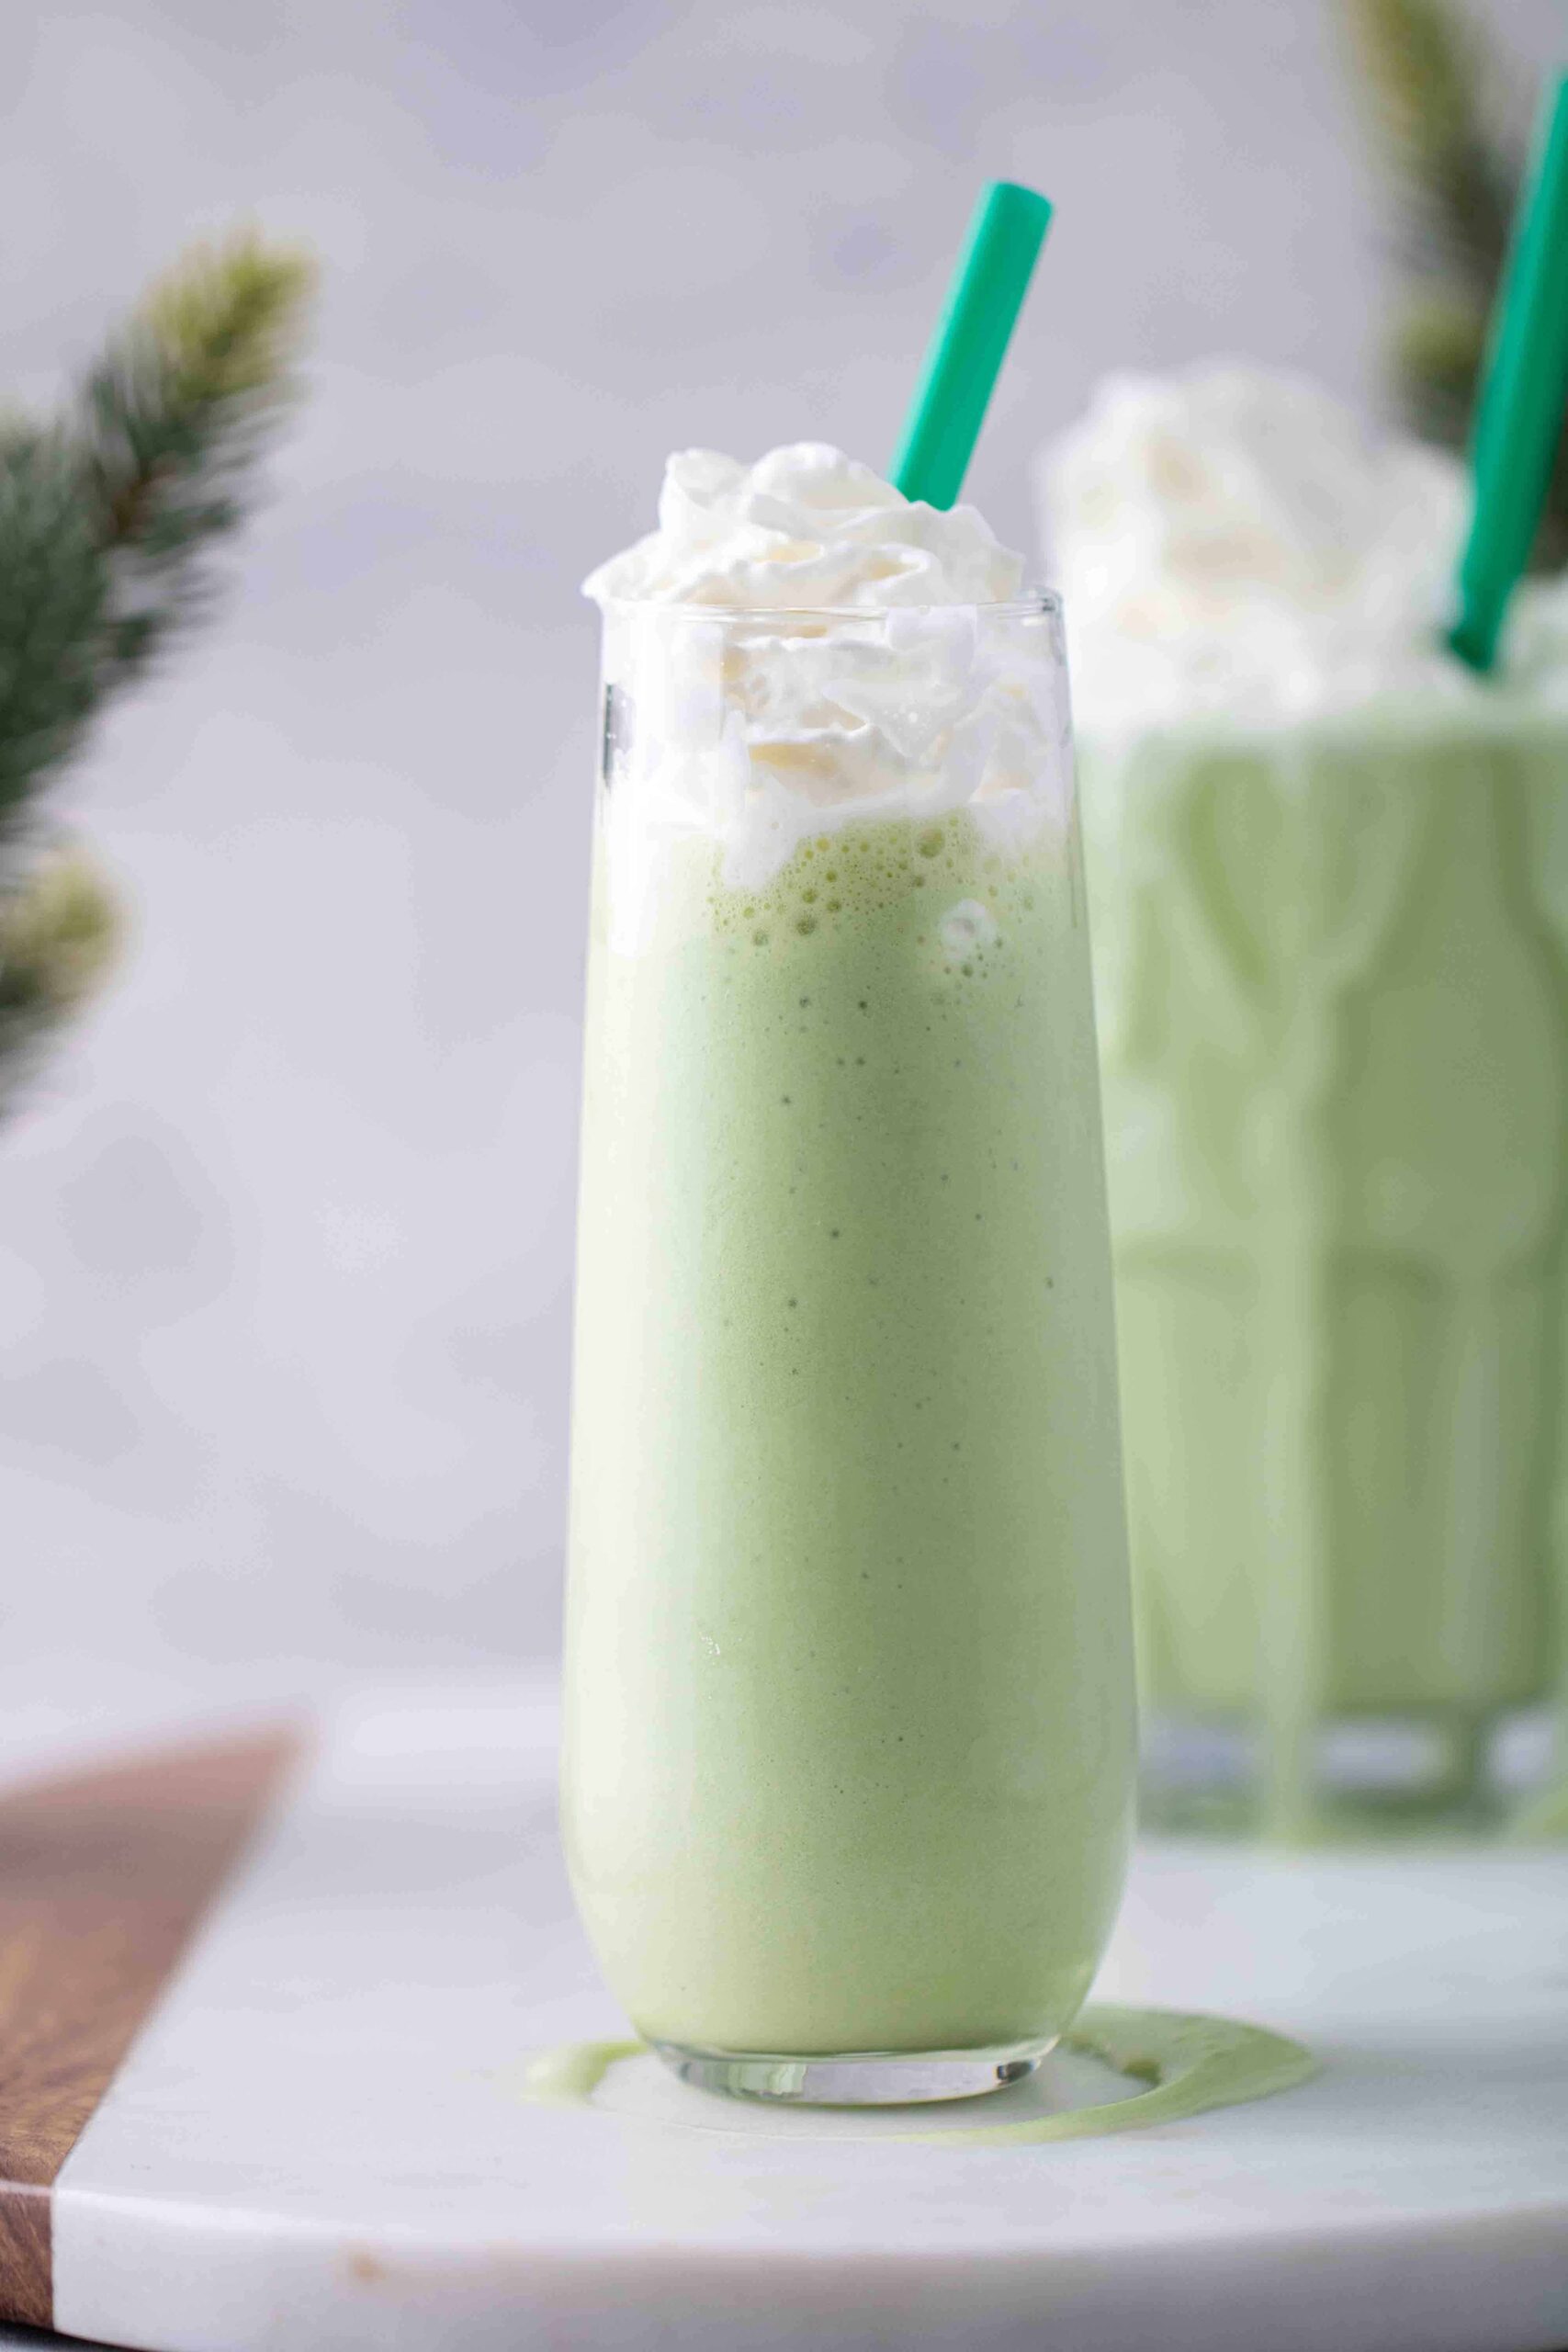 Starbucks Matcha Frappuccino Copycat Recipe - Lifestyle of a Foodie